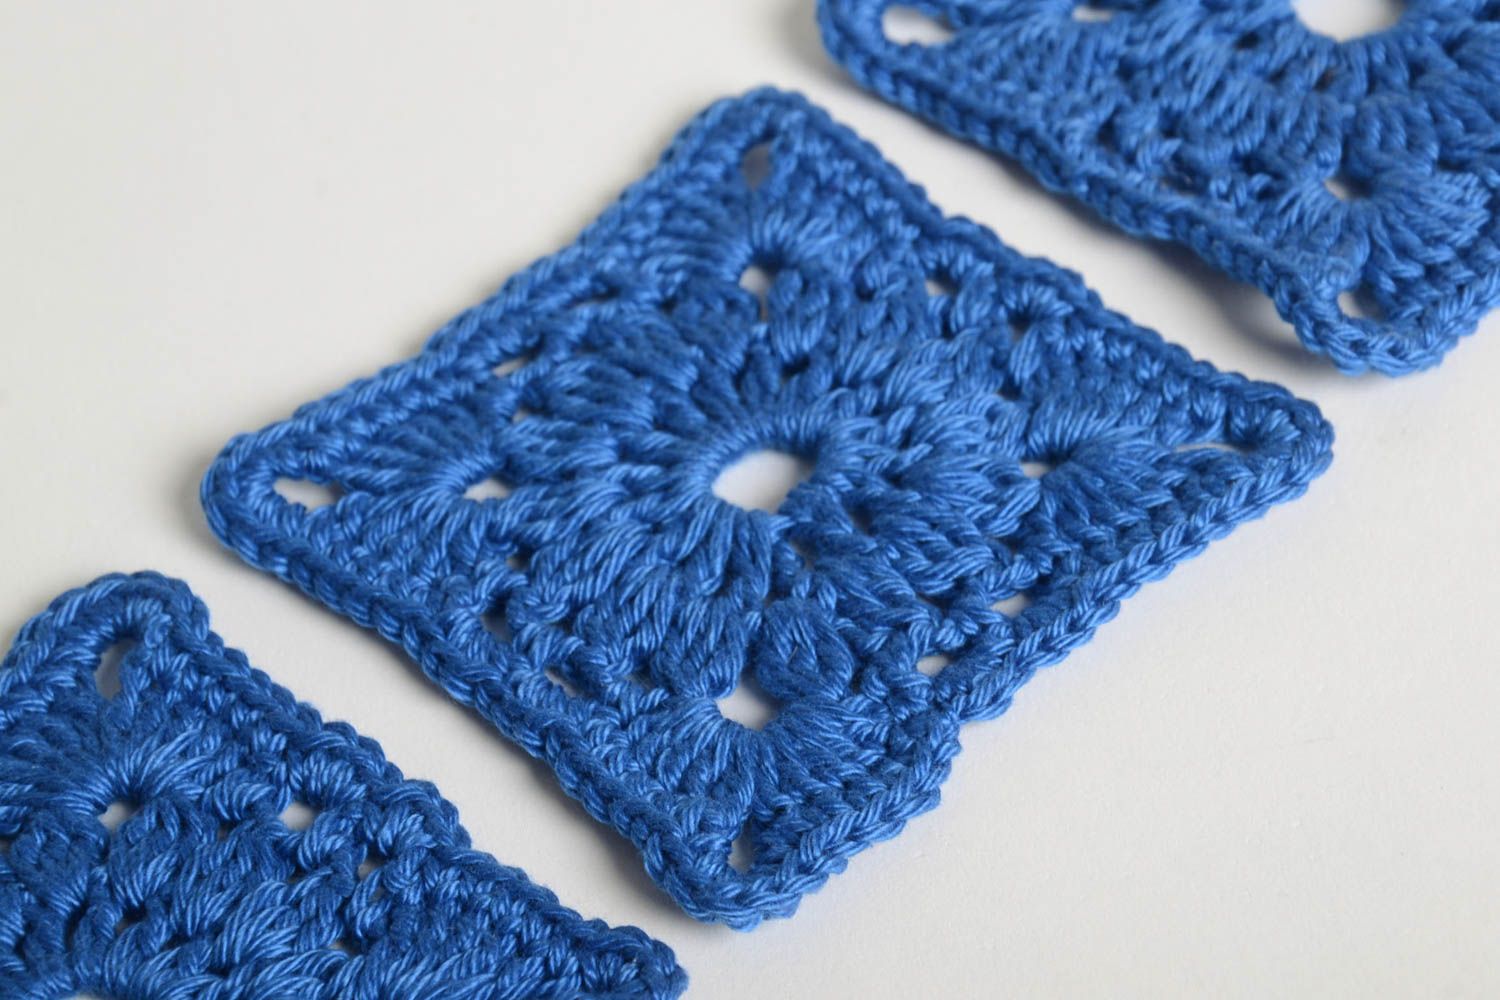 Cute handmade hot pads 4 pieces crochet coaster home textiles kitchen supplies photo 3